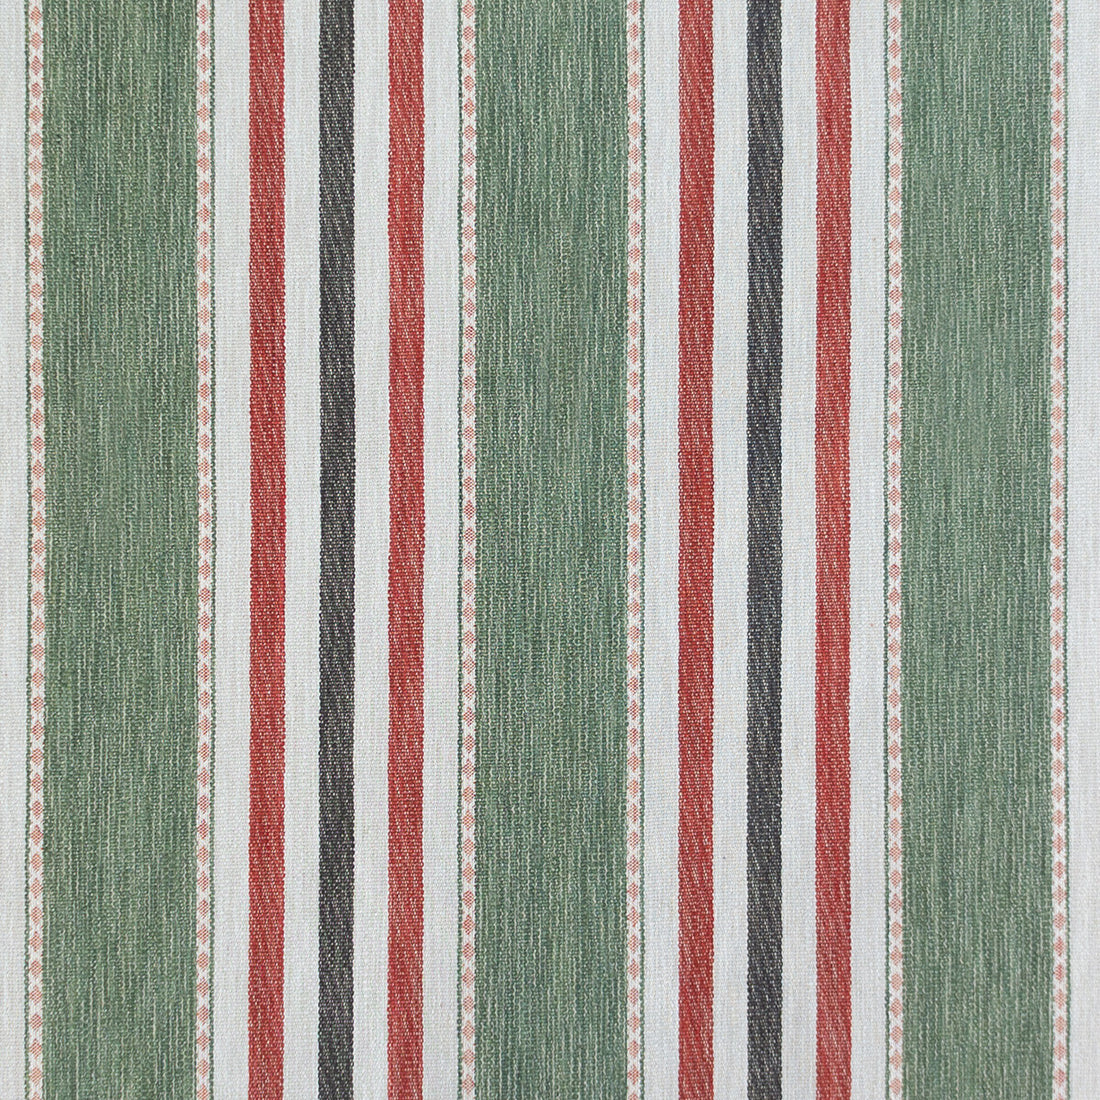 Albuquerque fabric in verde oscuro color - pattern GDT5151.007.0 - by Gaston y Daniela in the Gaston Rio Grande collection